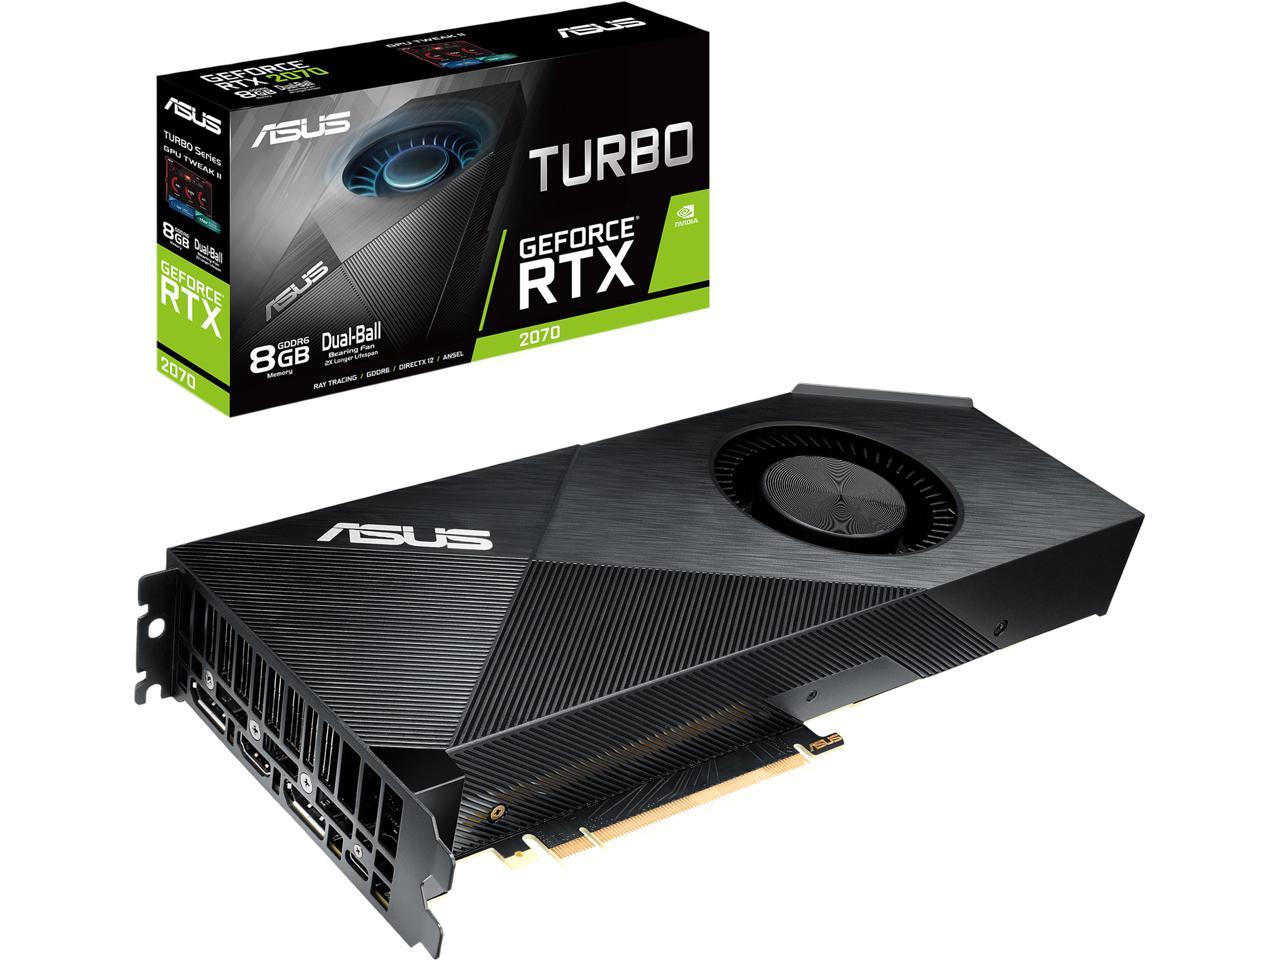 ASUS Turbo GeForce RTX 2070 DirectX 12 TURBO-RTX2070-8G 8GB 256-Bit GDDR6 PCI Express 3.0 HDCP Ready Video Card